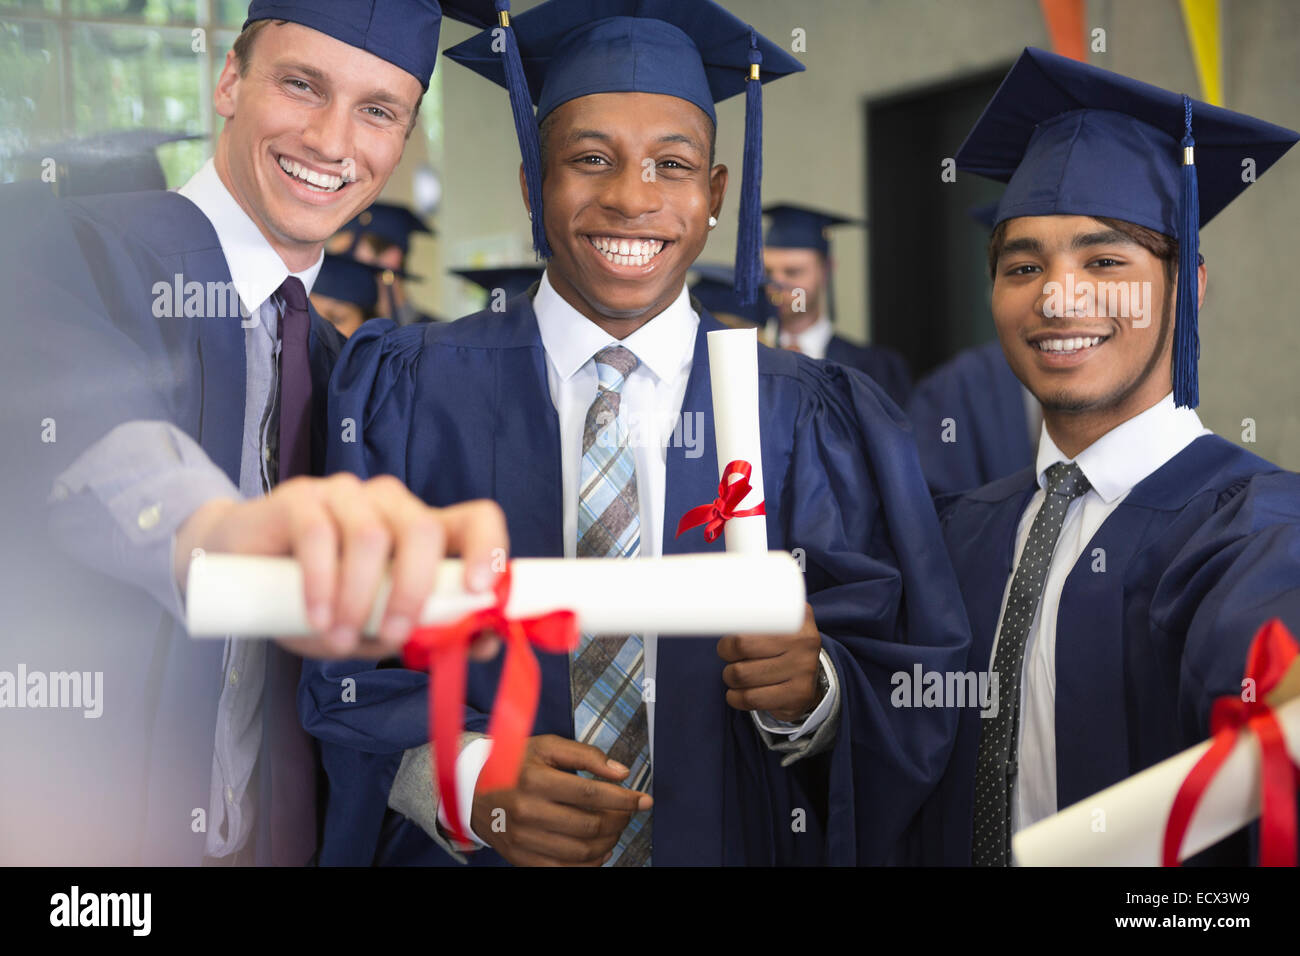 Portrait of smiling university students holding diplomas after graduation ceremony Stock Photo